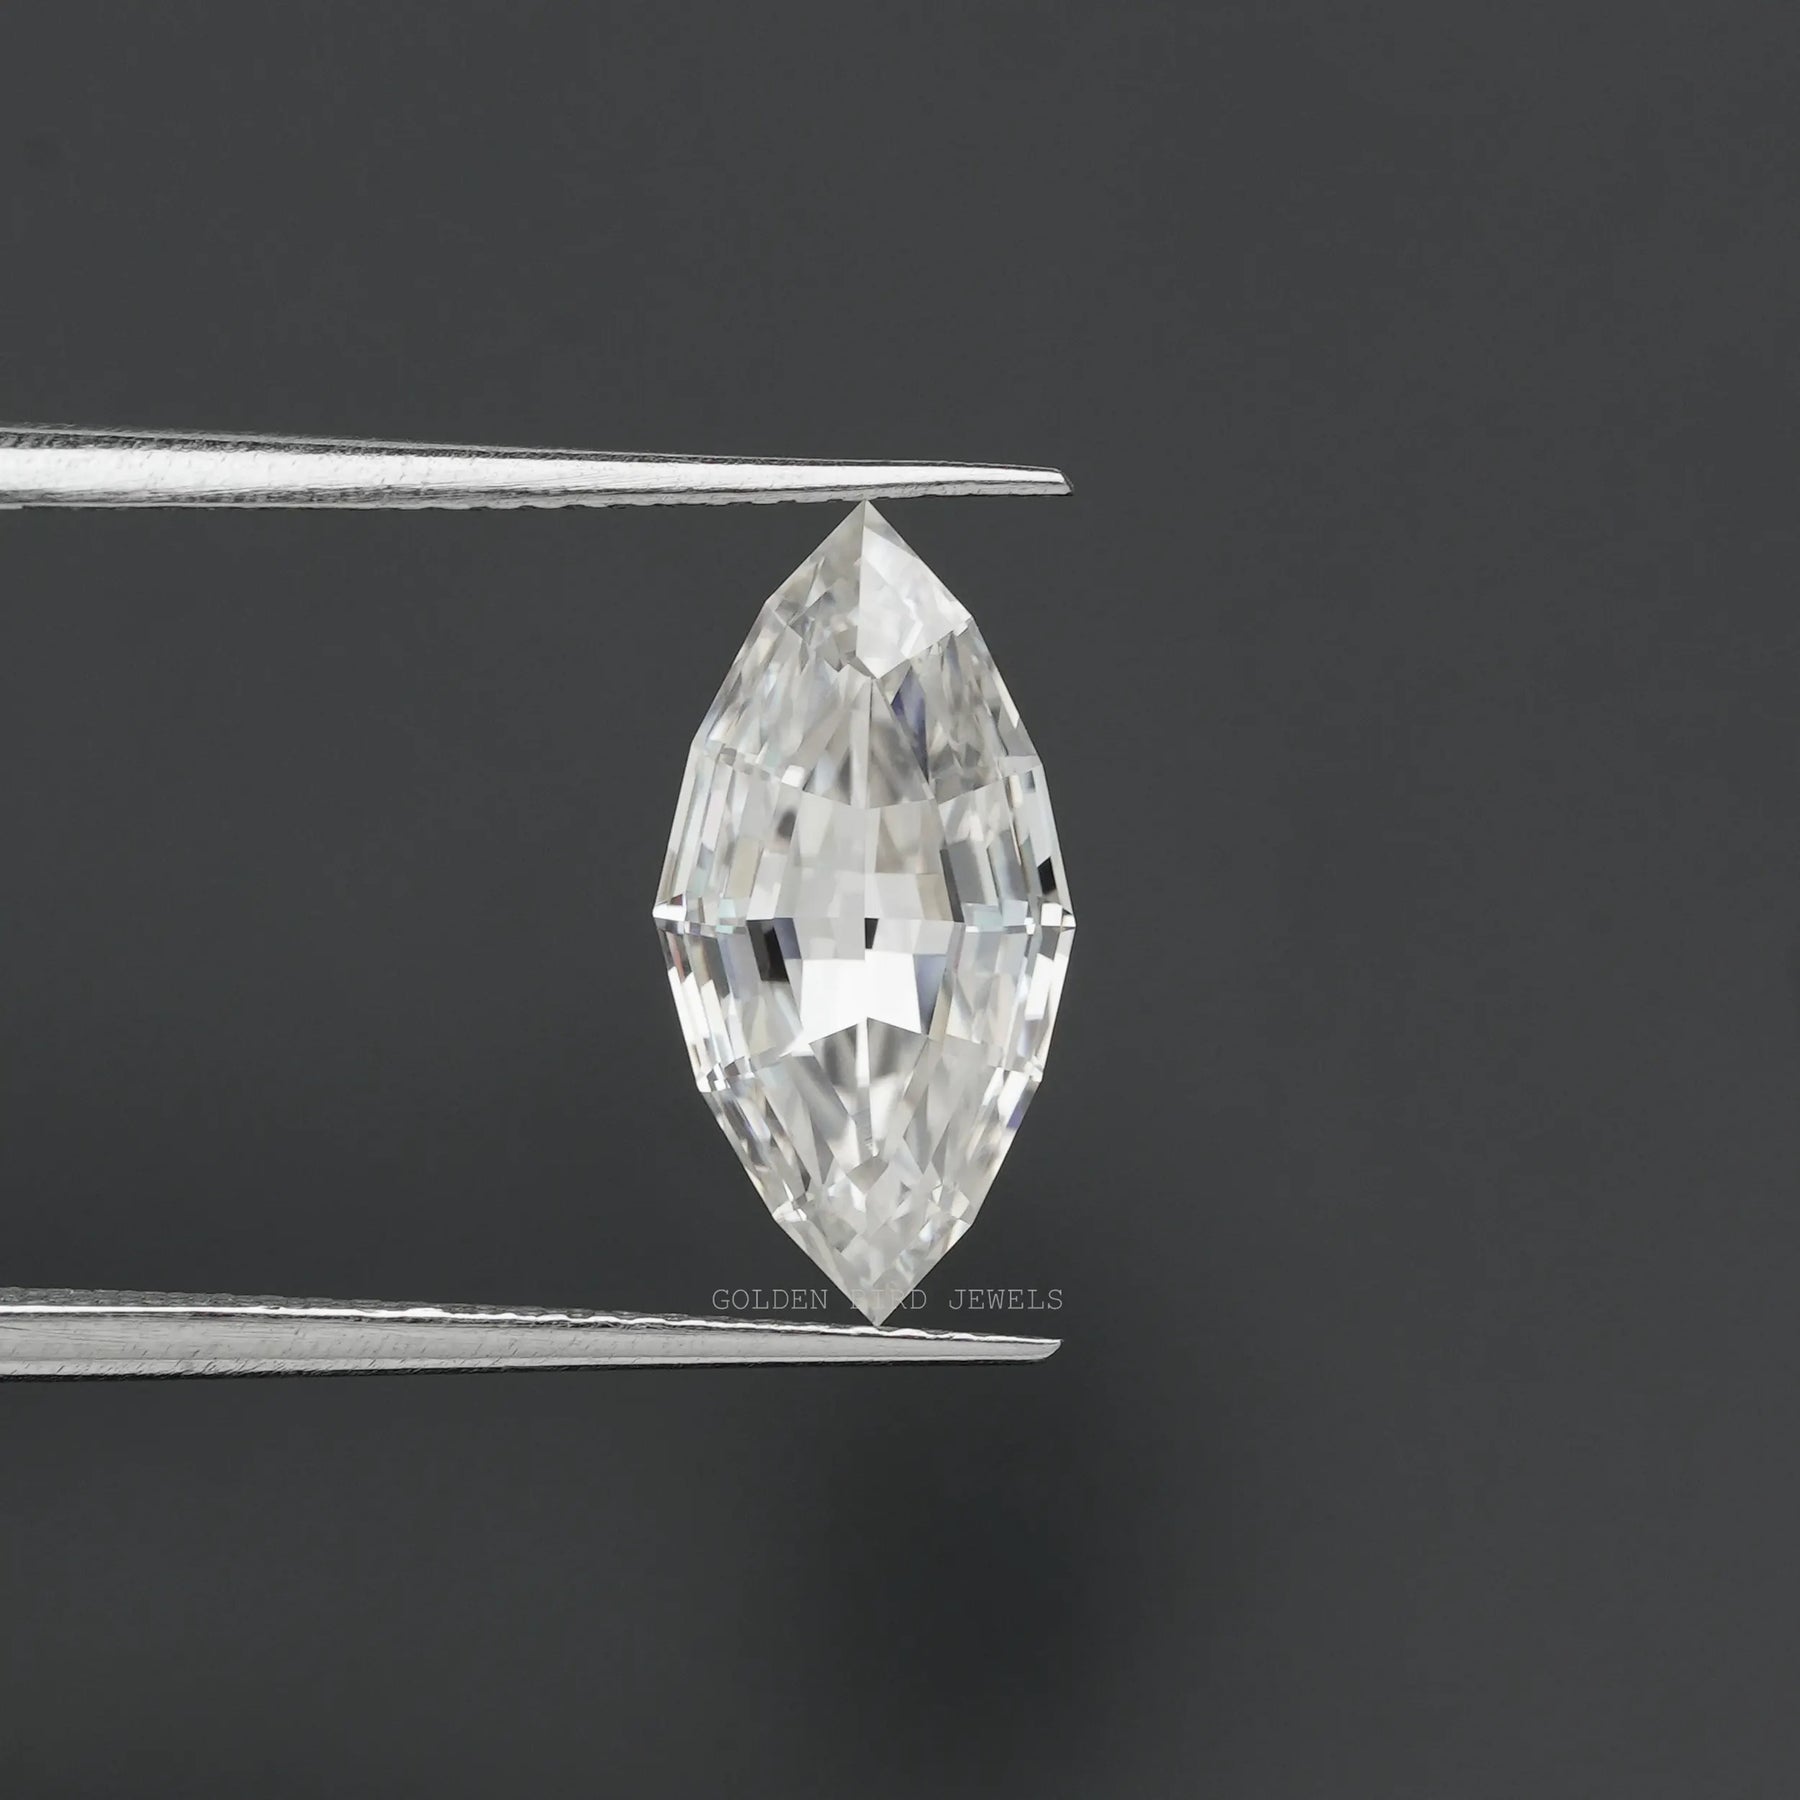 In tweezer 2.50 carat step cut marquise shape loose moissanite diamond